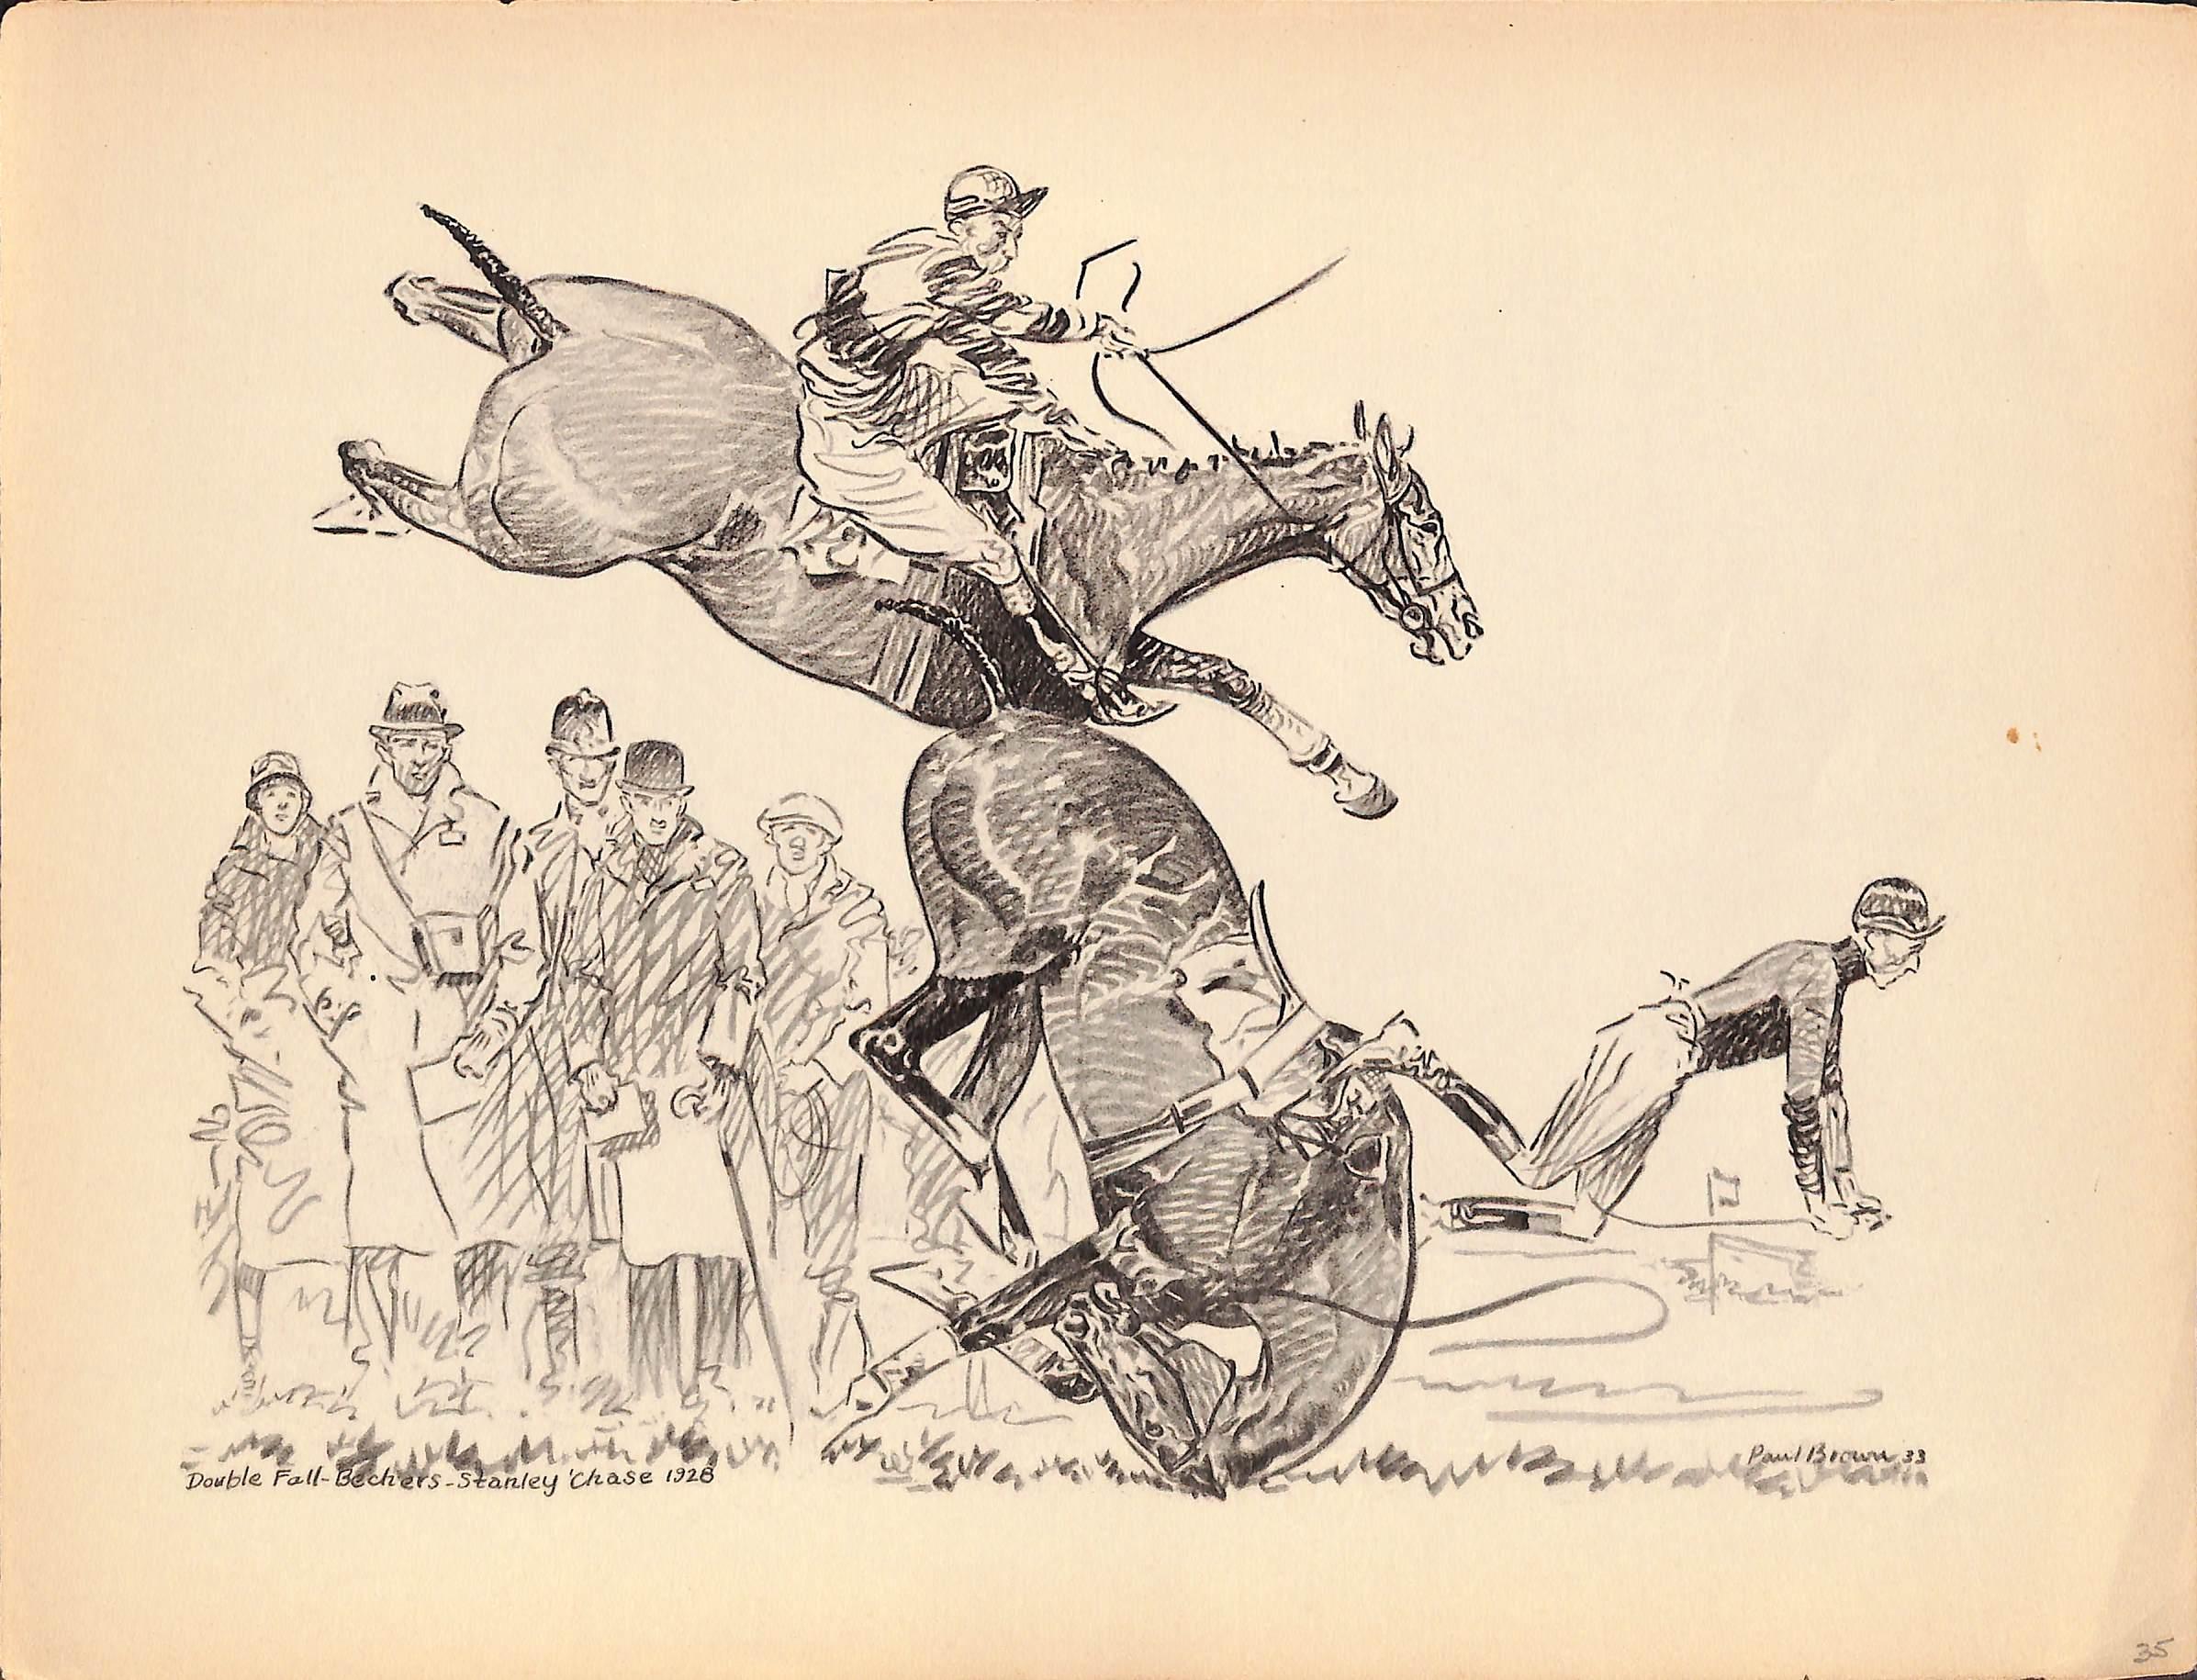 Double Fall Bechers Stanley Chase 1928 – Art von Paul Desmond Brown